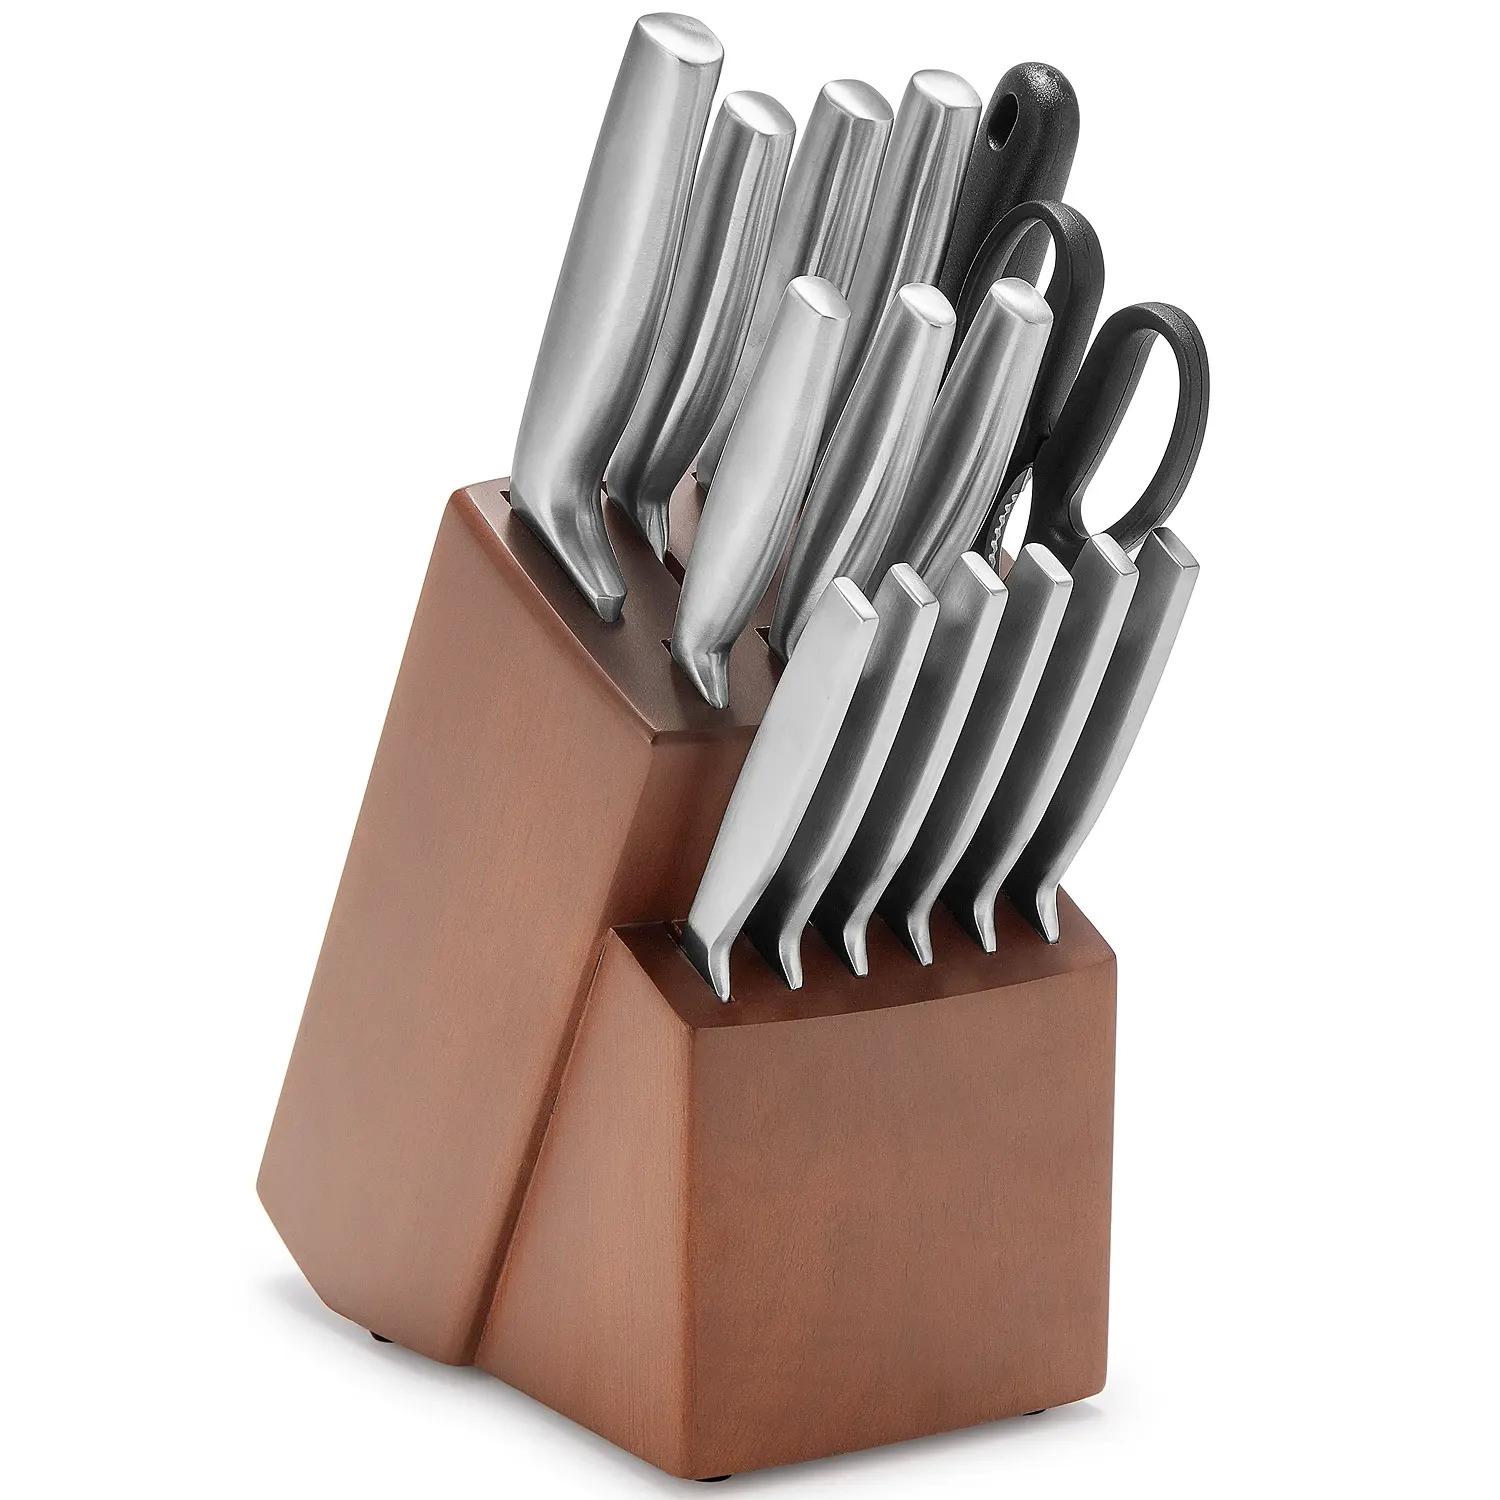 16-Piece Belgique Knife Block Set for $39.93 Shipped